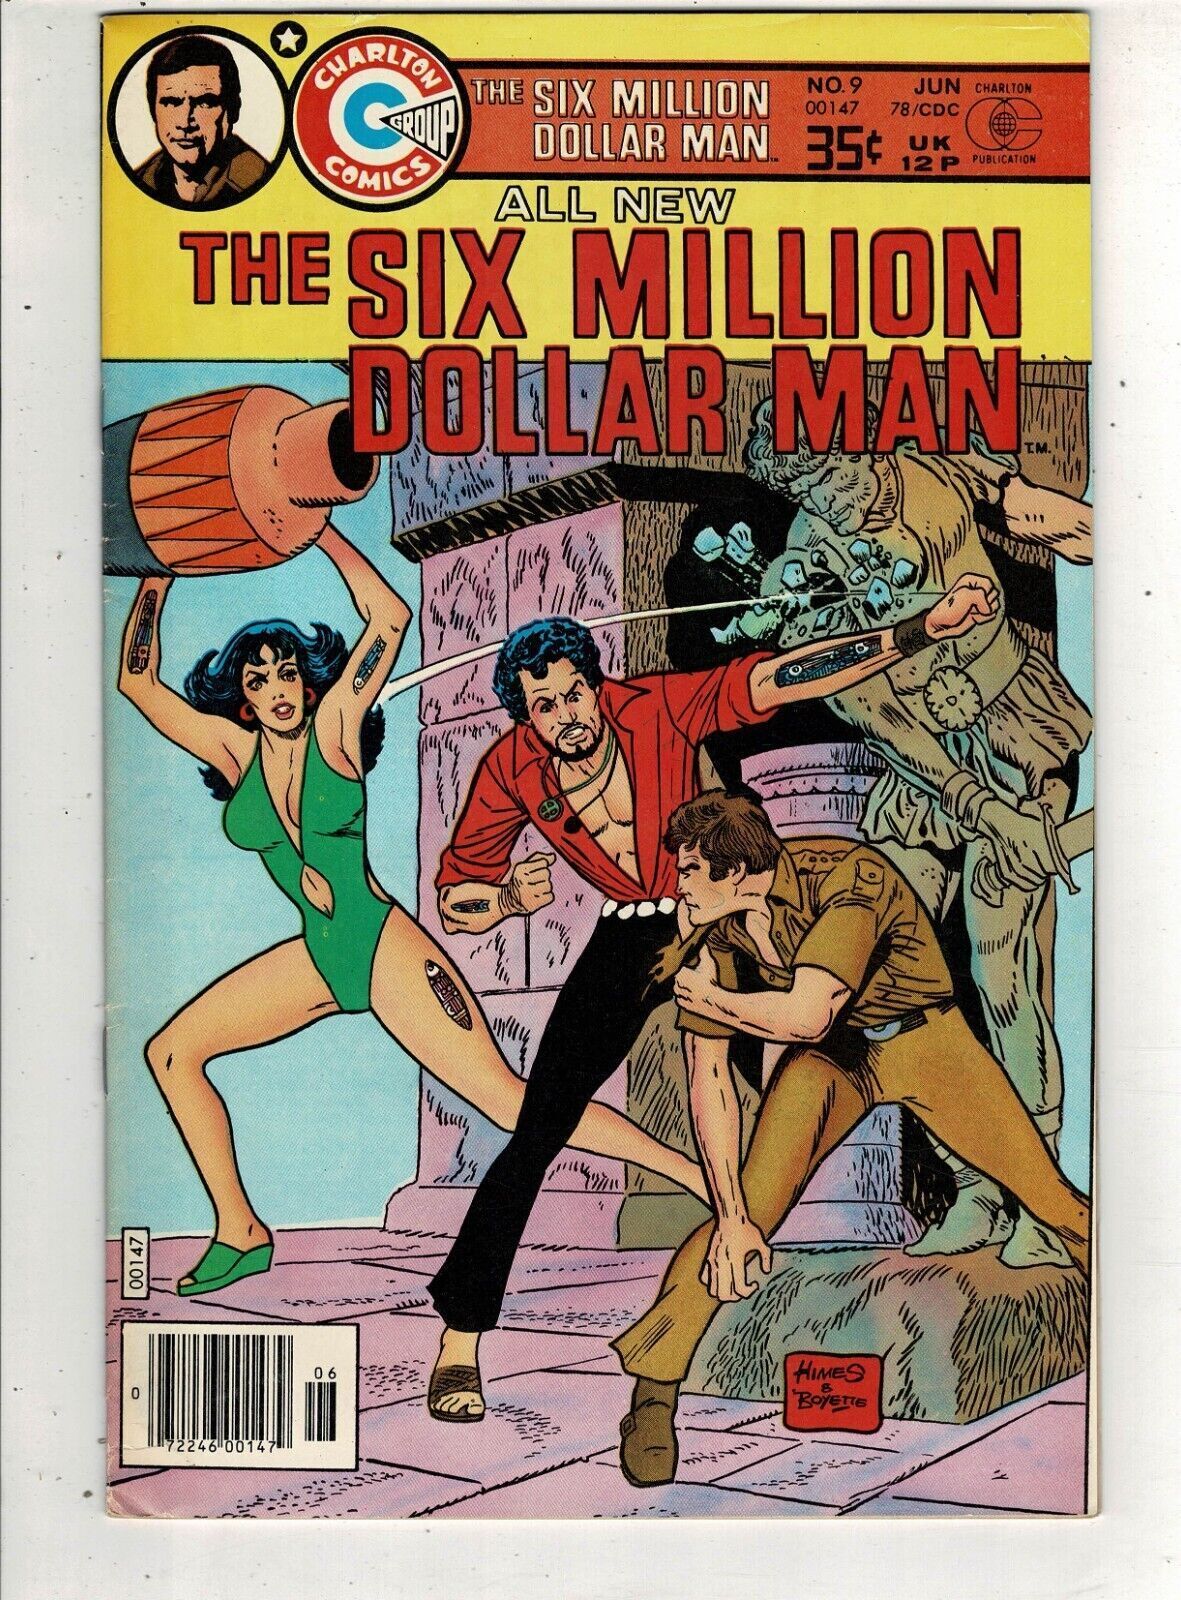 JUNE 1978 THE SIX MILLION DOLLAR MAN #9 MATCH-UP CHARLTON COMICS NYC857